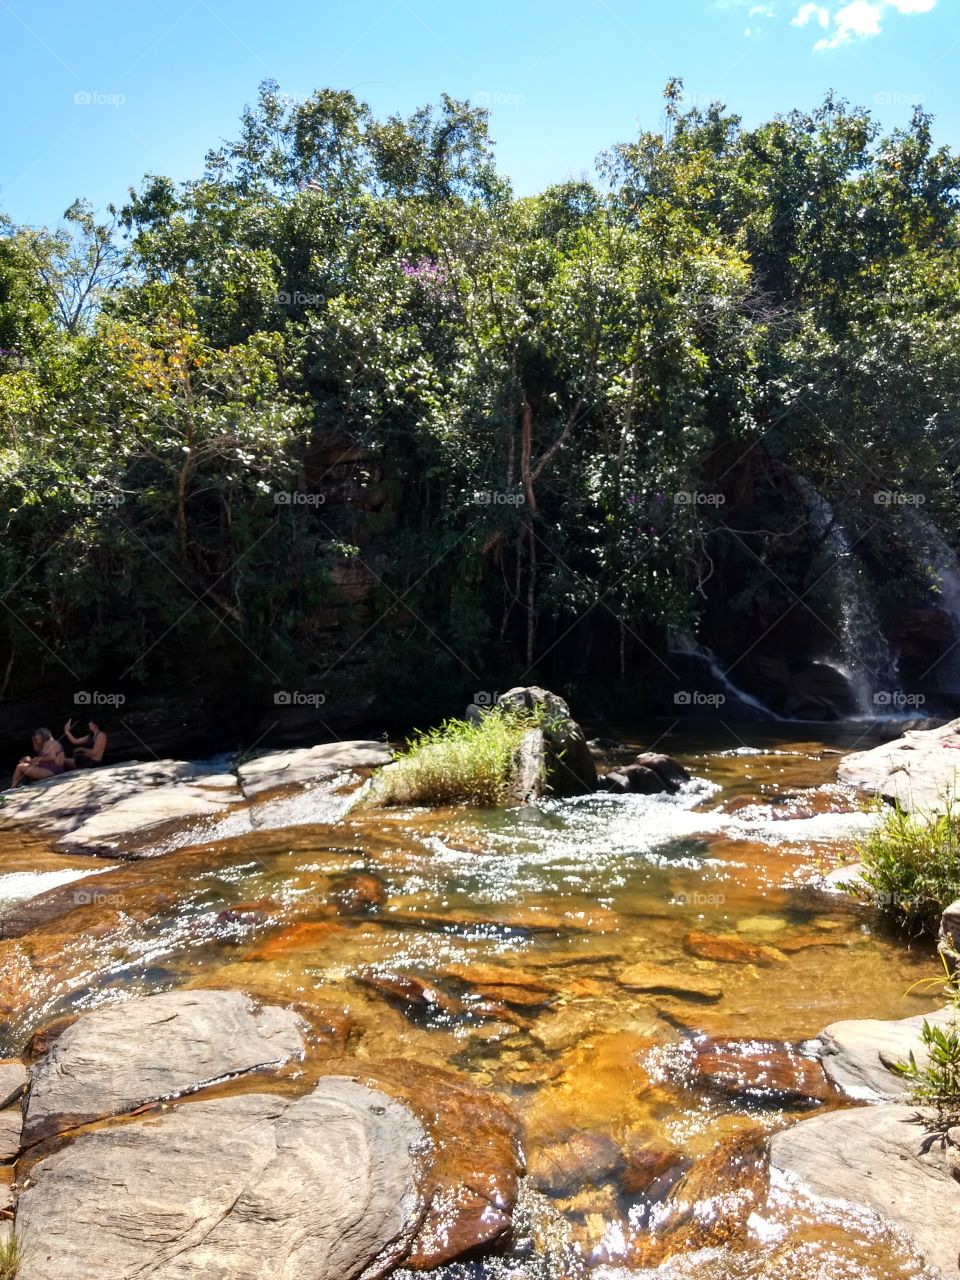 Pirenópolis/GO 
#Natureza #semFiltro #cachoeira ♥️
Fotos naturais